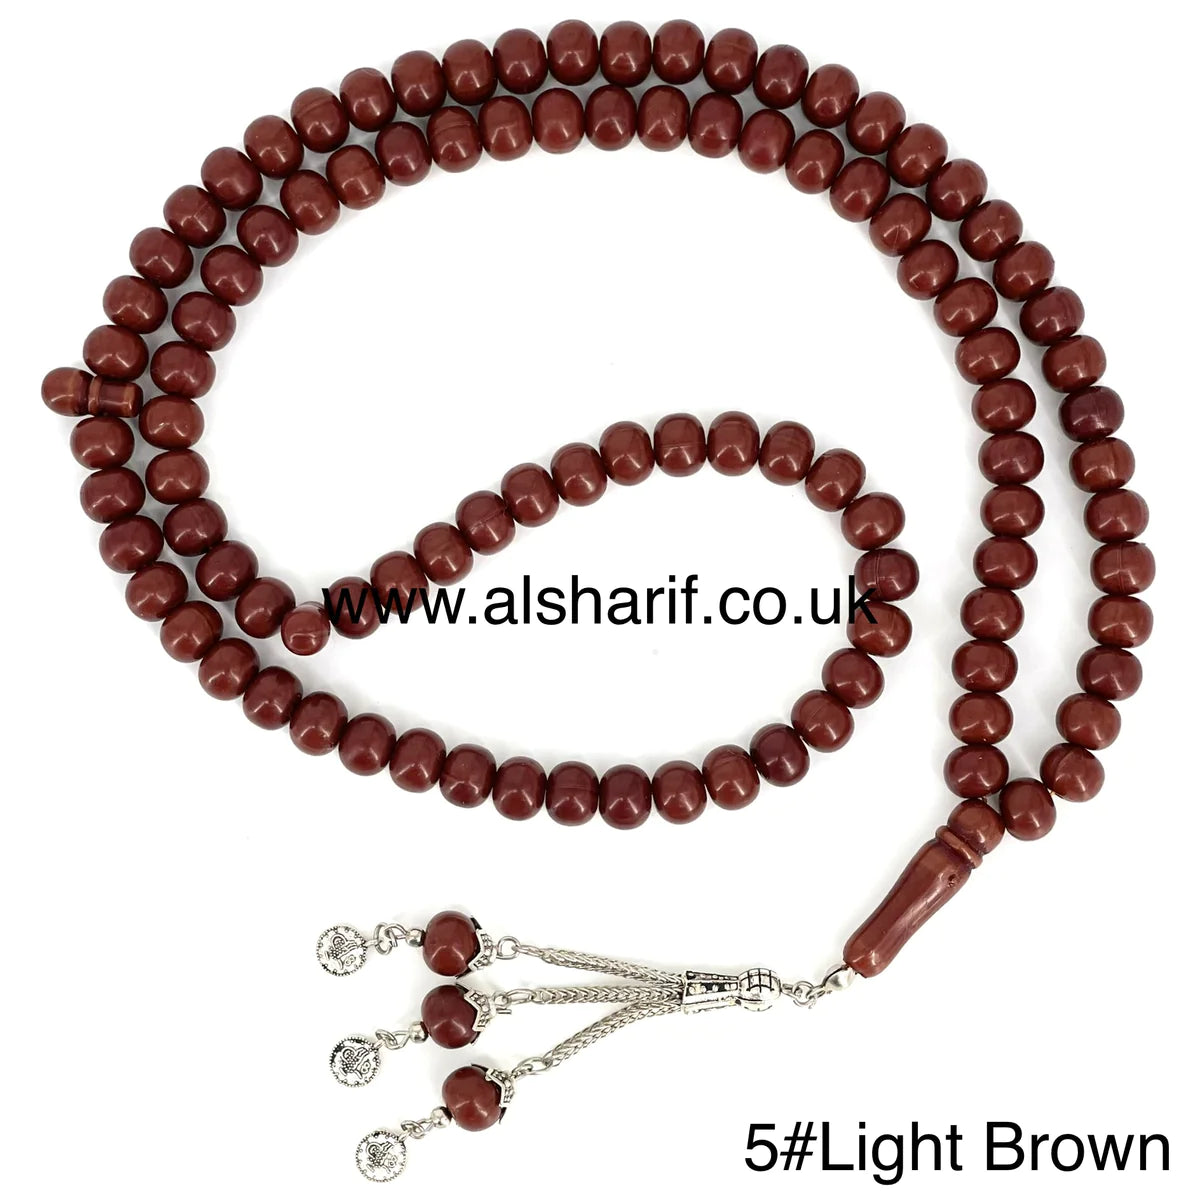 Tasbeeh 99 Beads 5#Light Brown